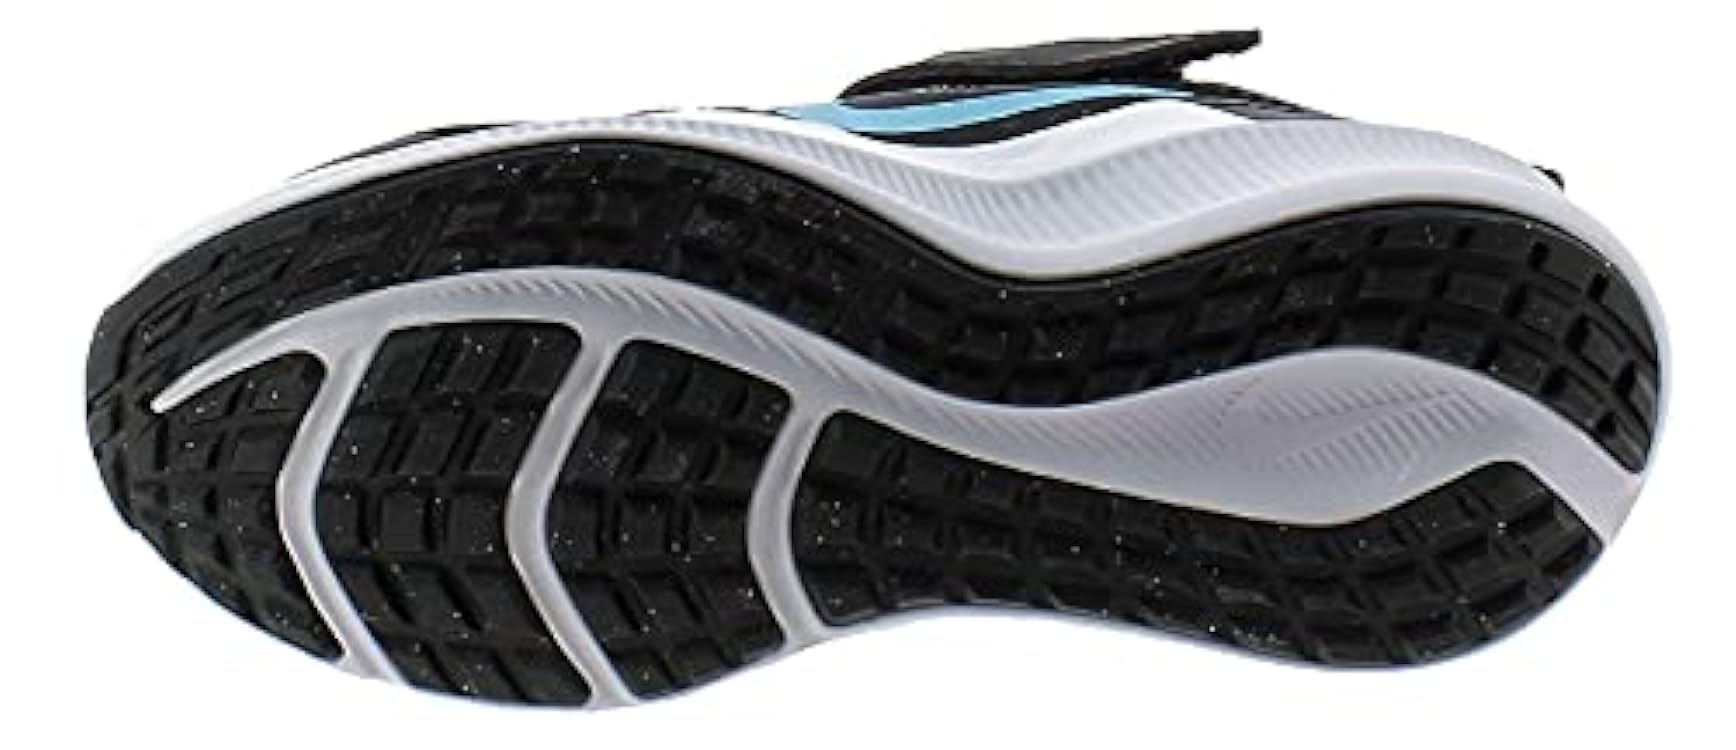 Nike Downshifter 10 (PSV), Scarpe da Corsa Unisex-Bambini e Ragazzi 085620685